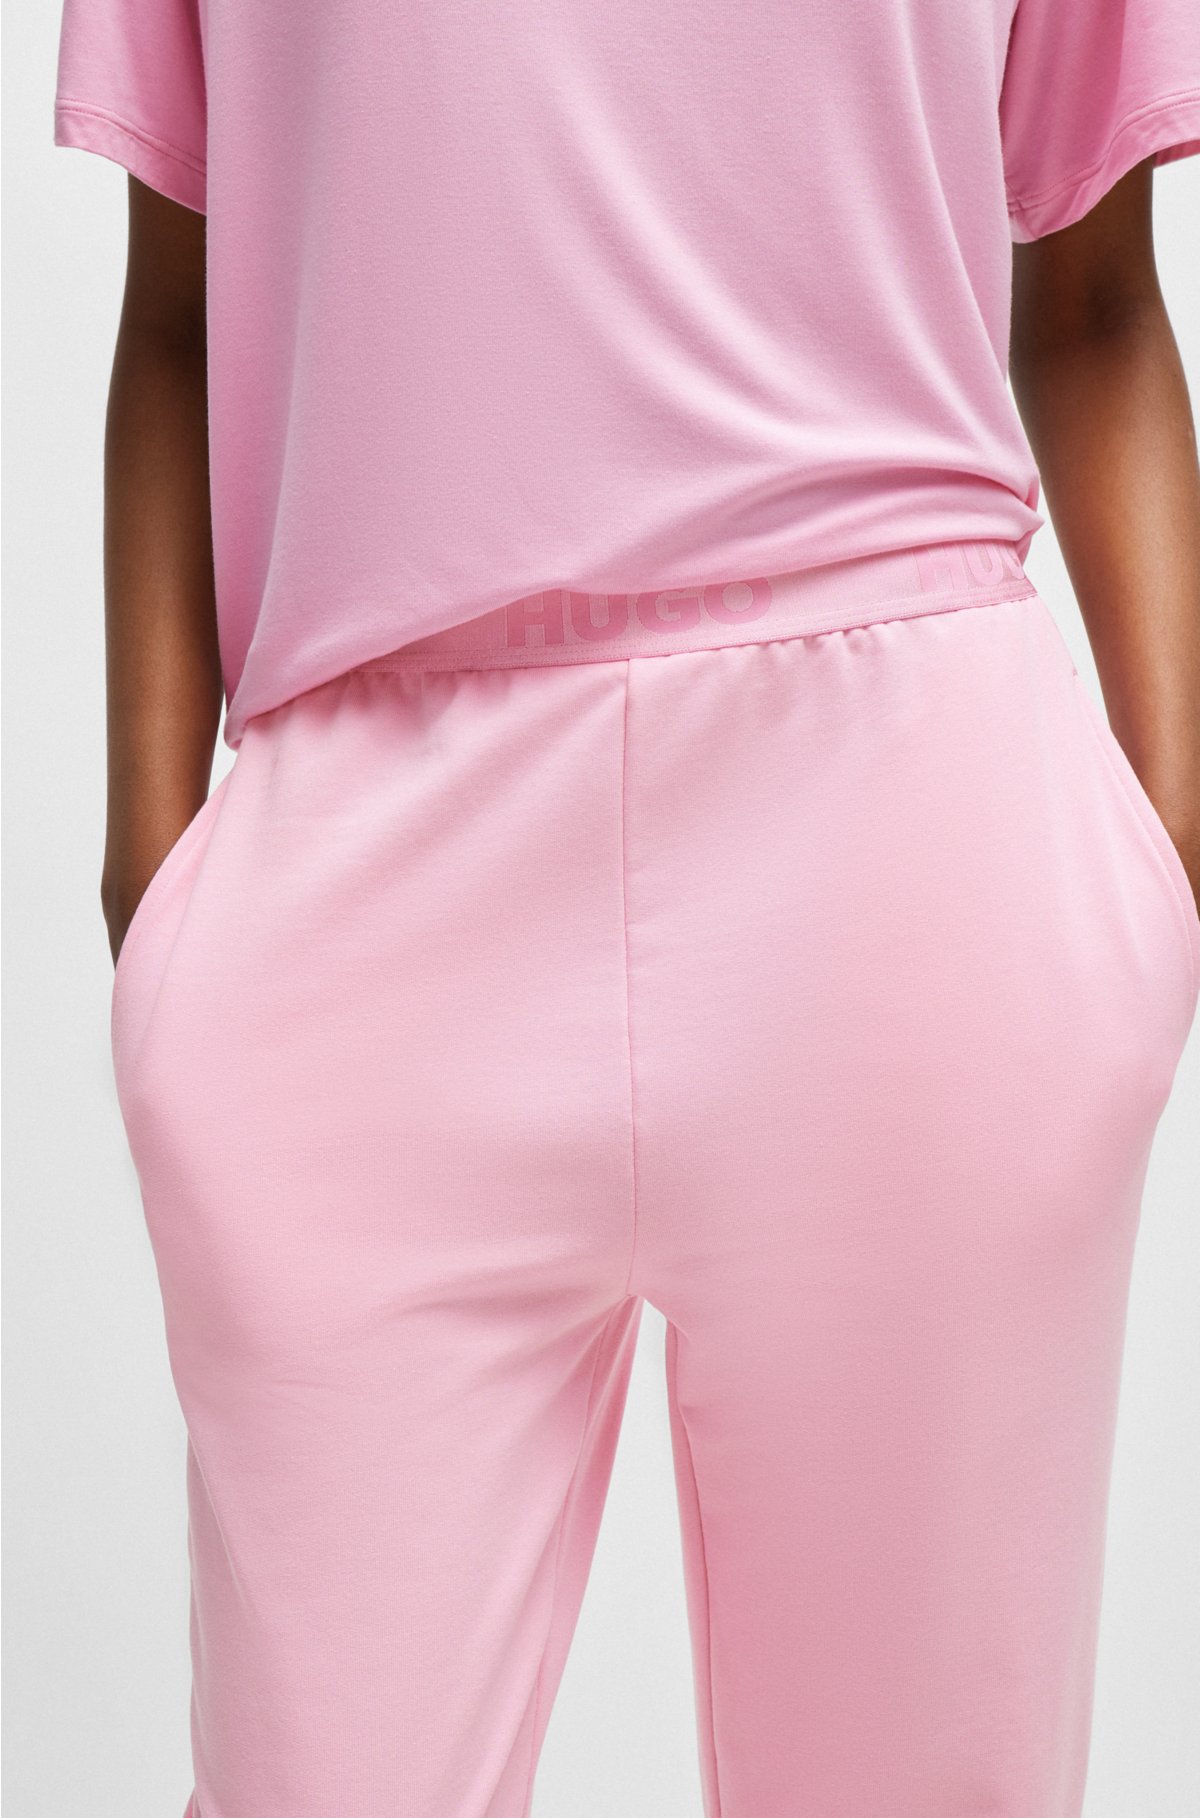 Cotton-blend tracksuit bottoms with logo waistband, light pink